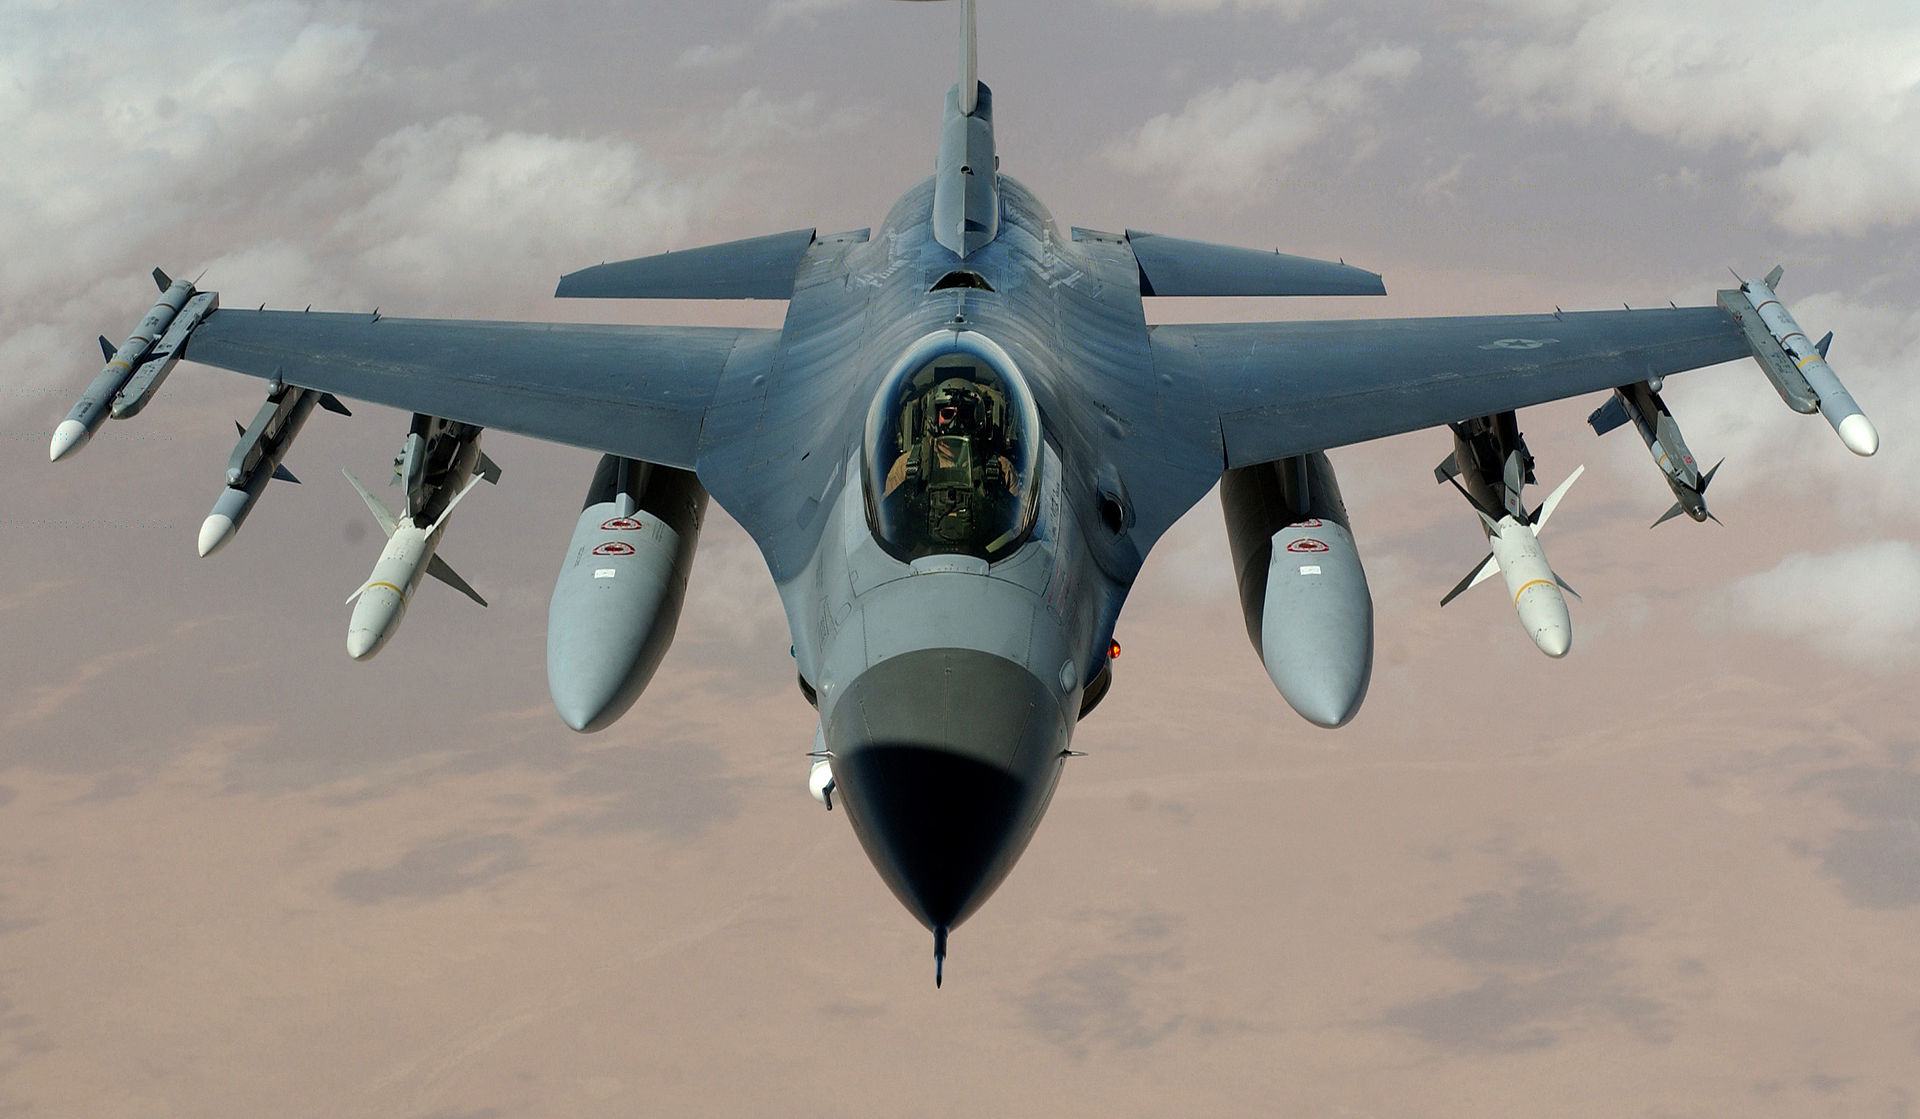 https://upload.wikimedia.org/wikipedia/commons/thumb/6/66/F-16_Fighting_Falcon.jpg/1920px-F-16_Fighting_Falcon.jpg